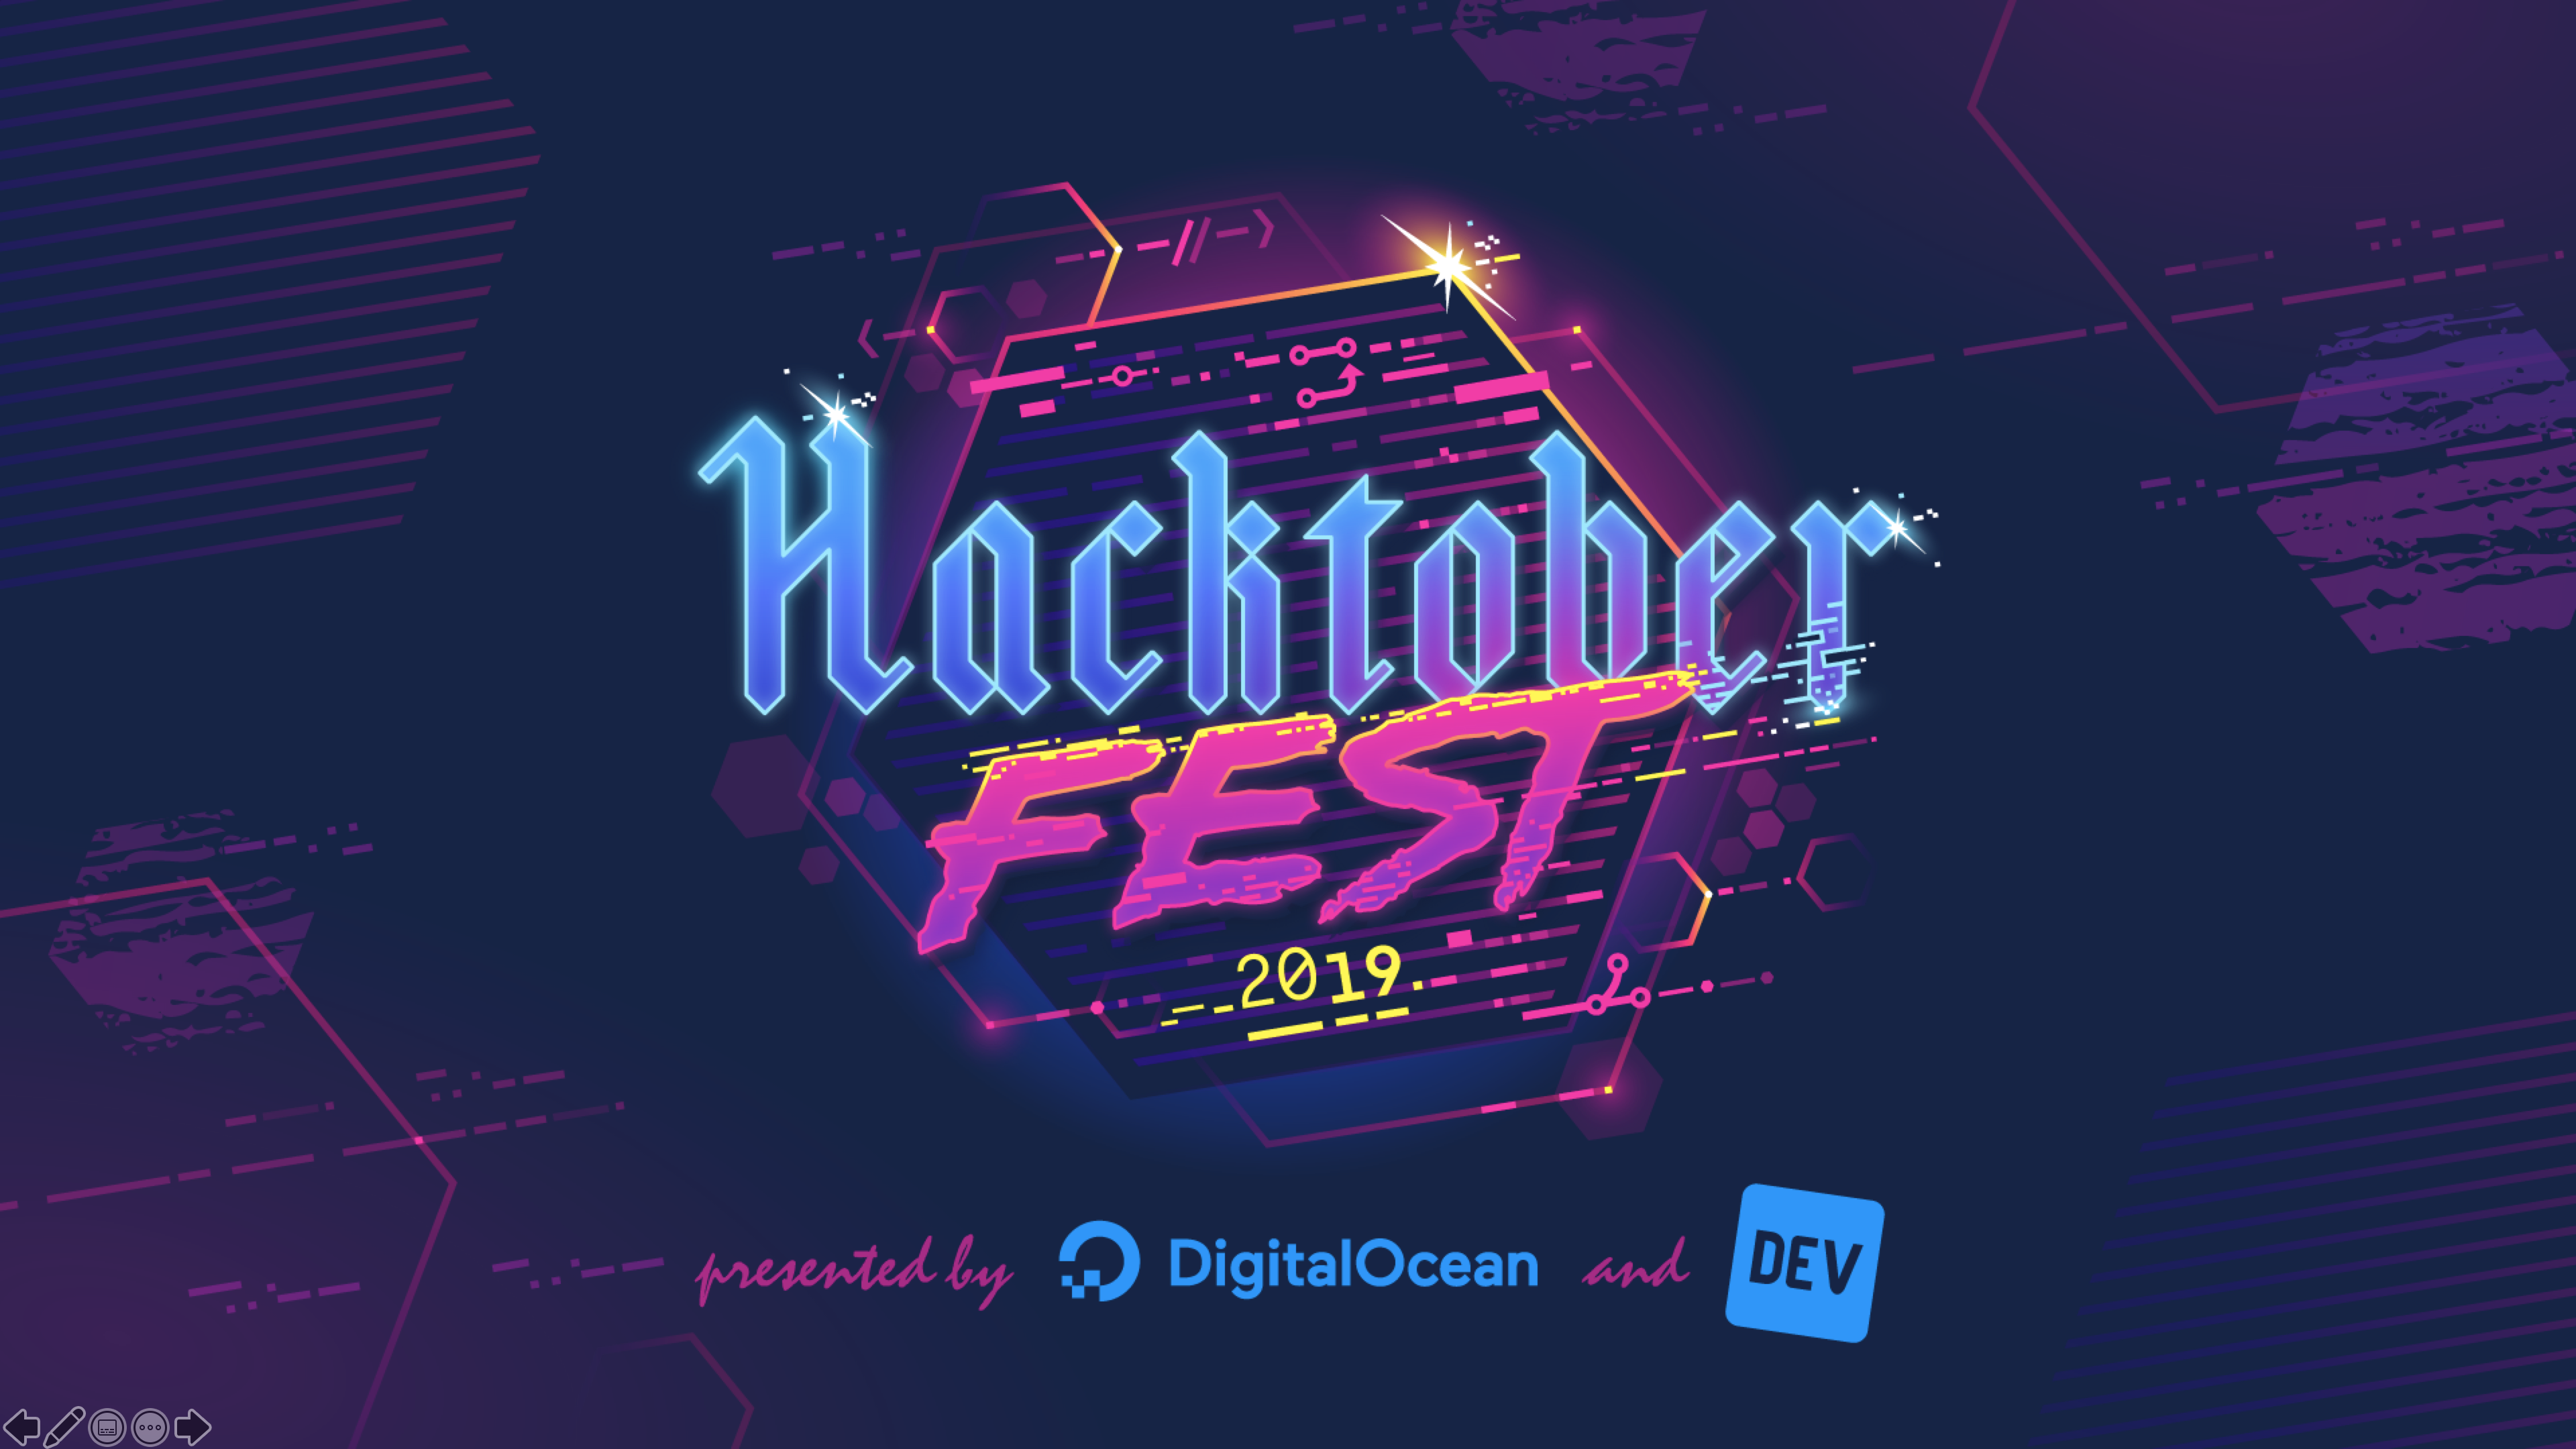 The Hacktoberfest logo for 2019